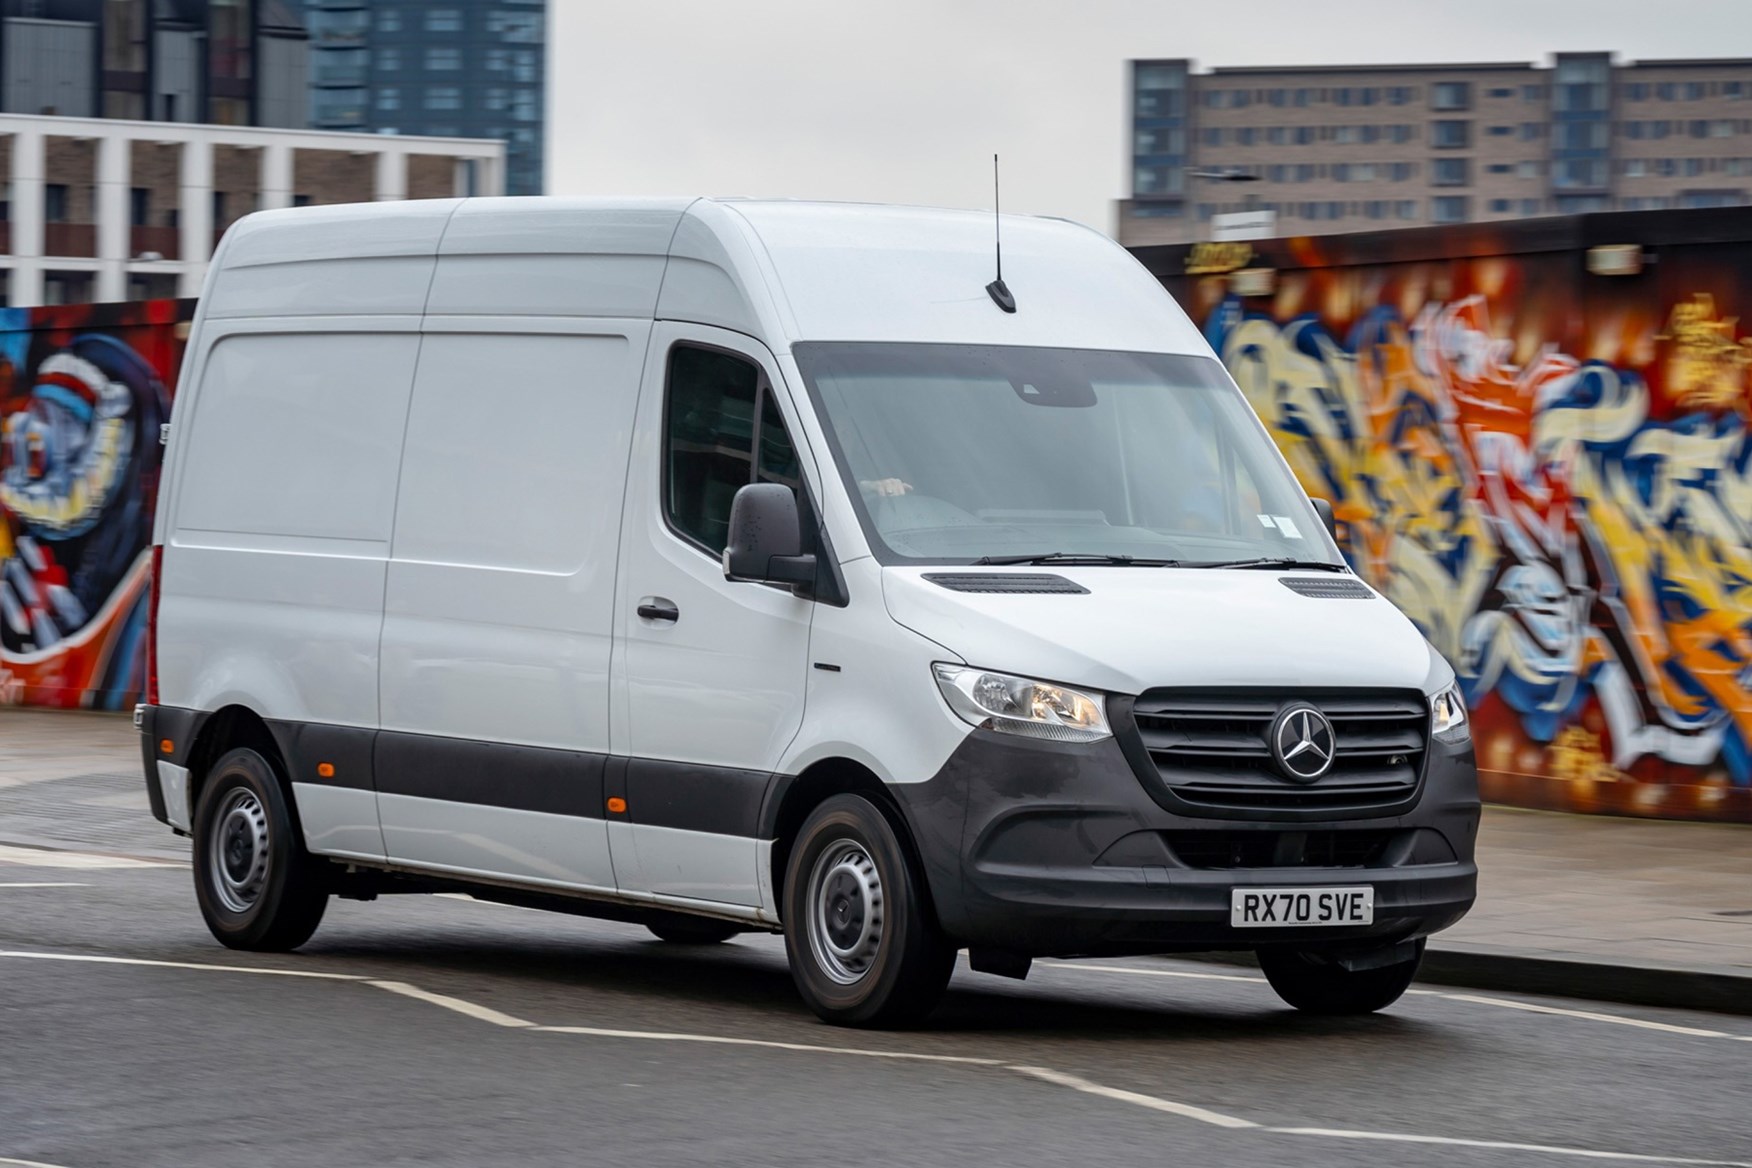 UK's best van? Most reliable now | Parkers